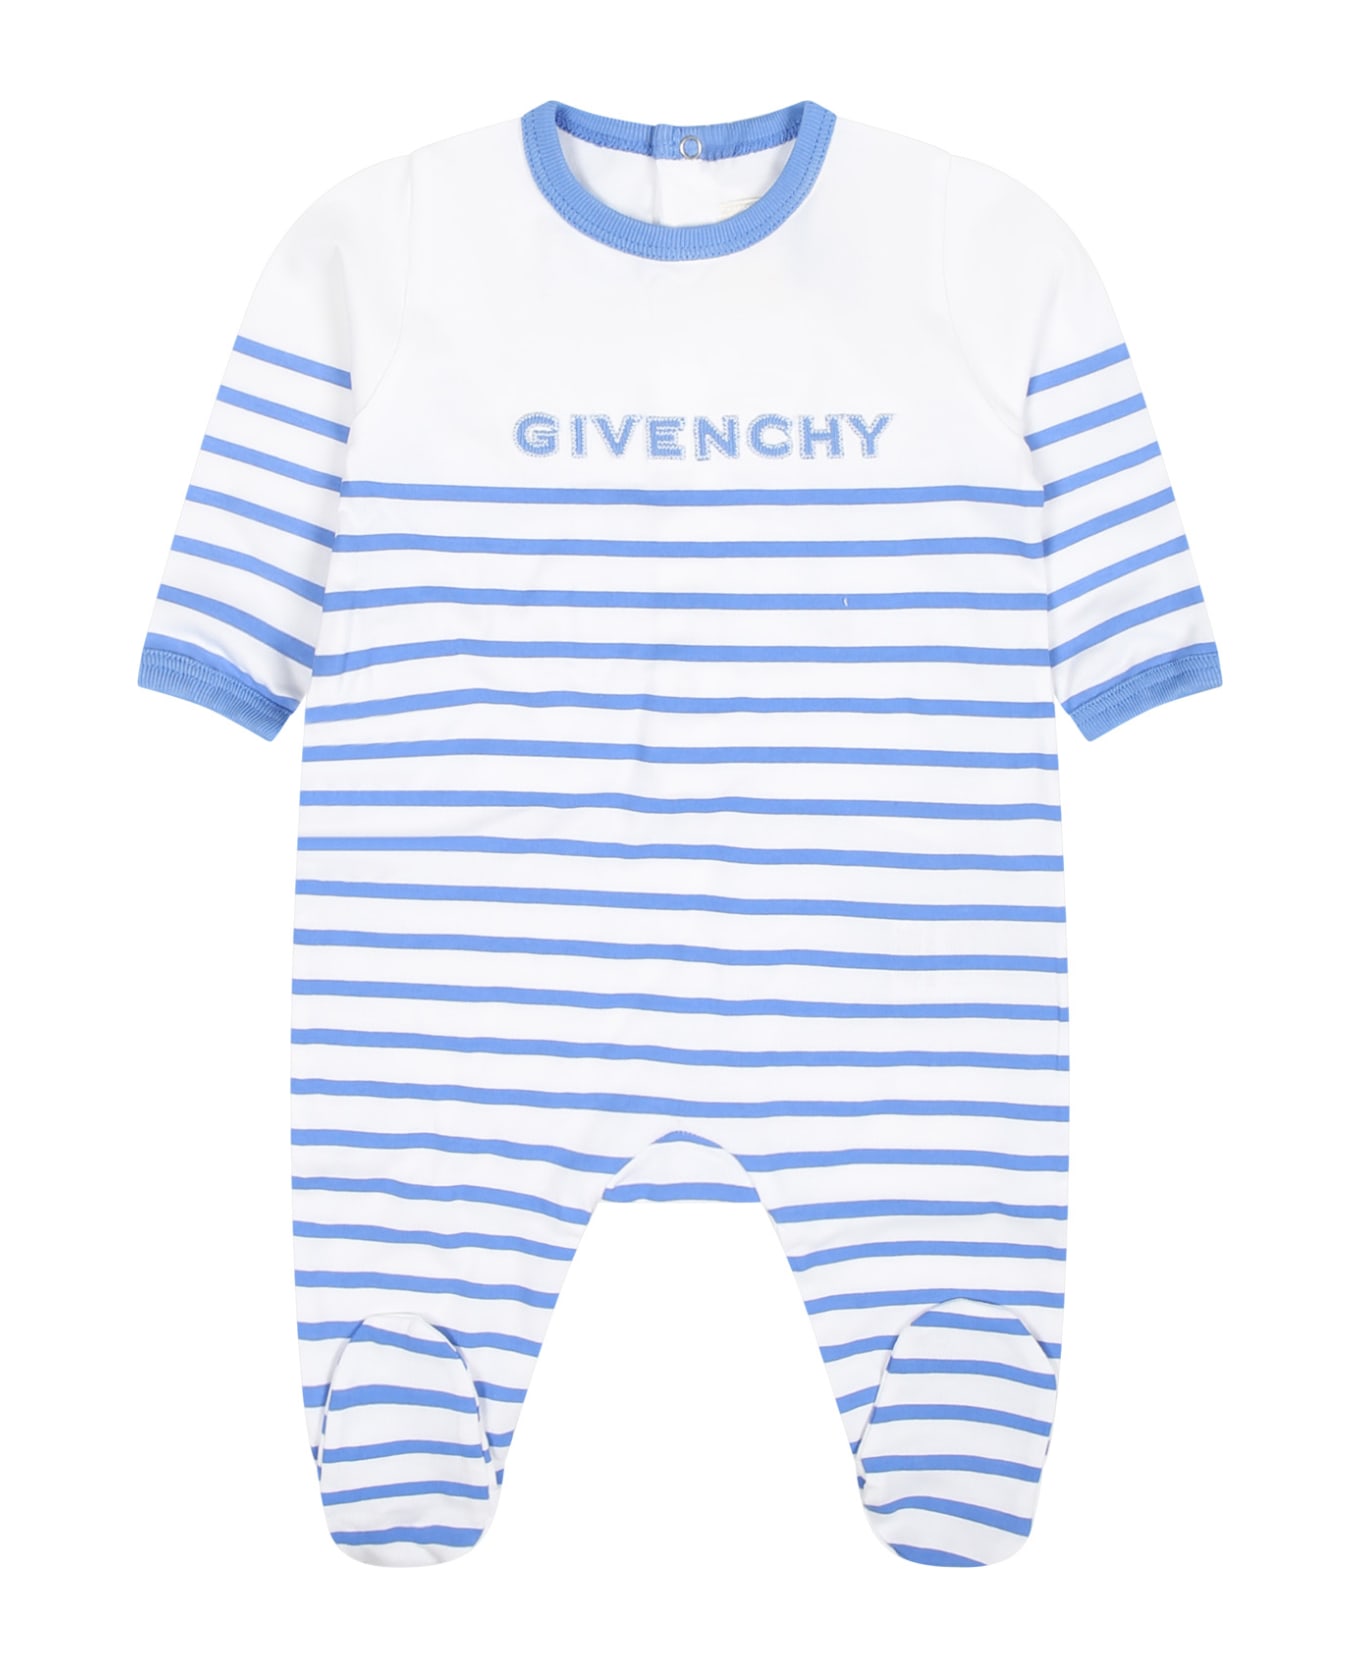 Givenchy Light Blue Set For Baby Boy With Logo Stripes - Light Blue